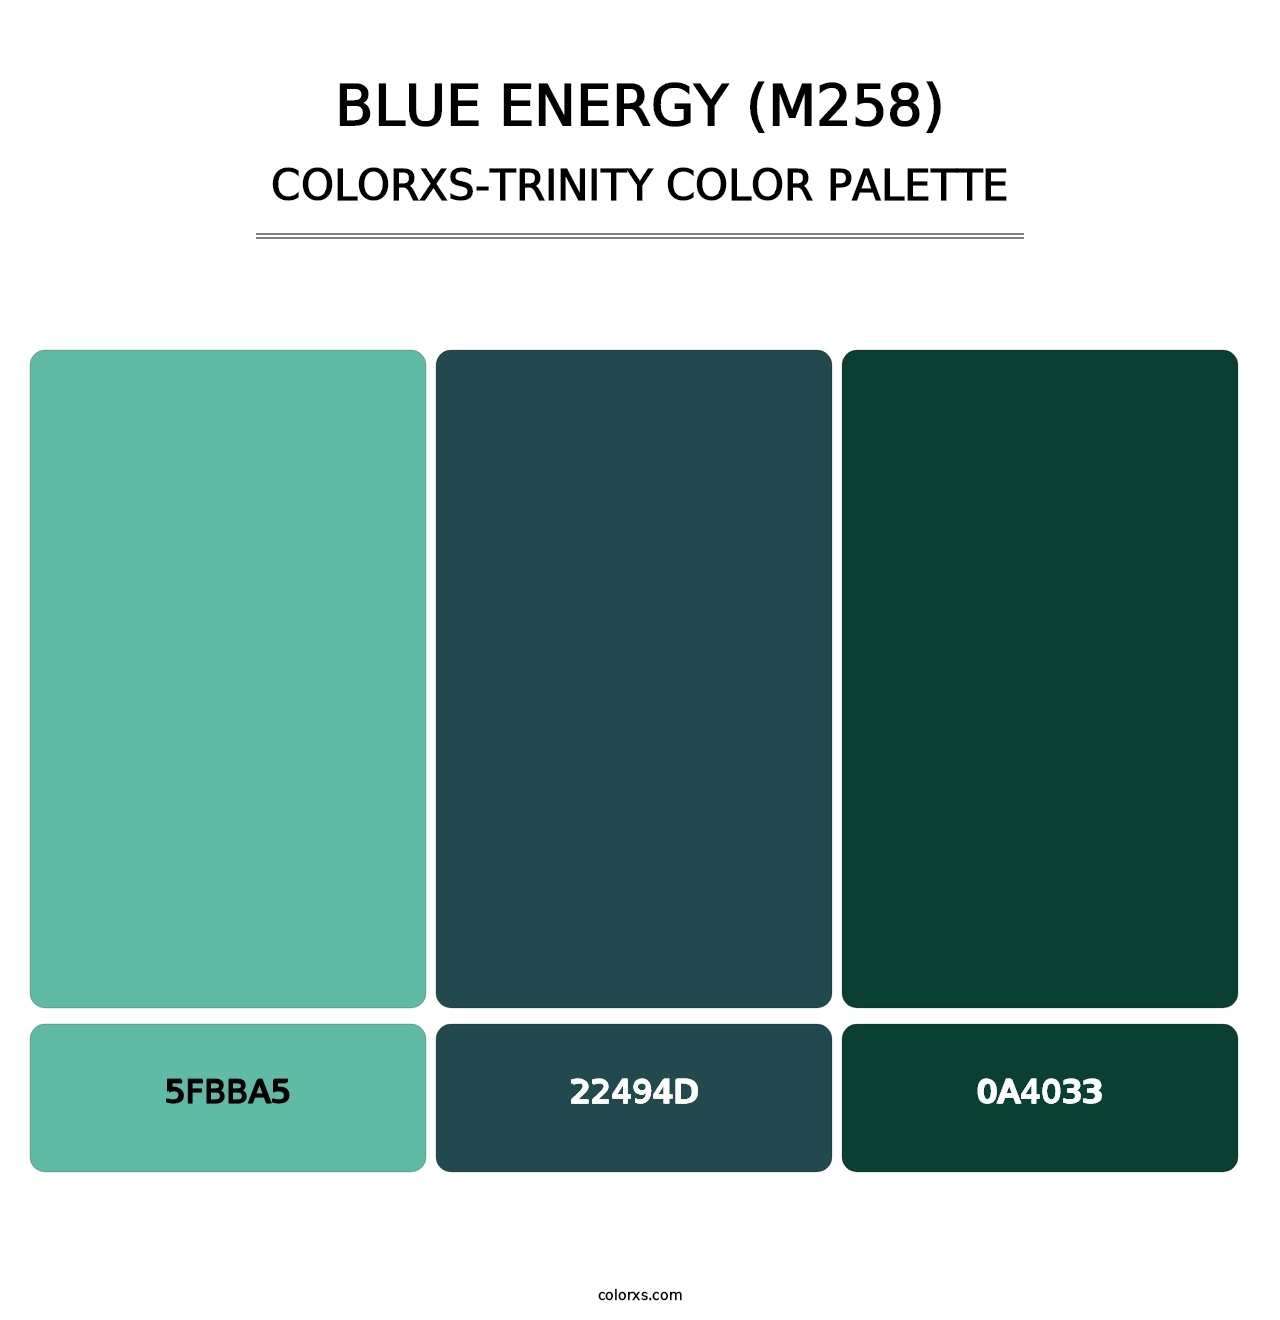 Blue Energy (M258) - Colorxs Trinity Palette